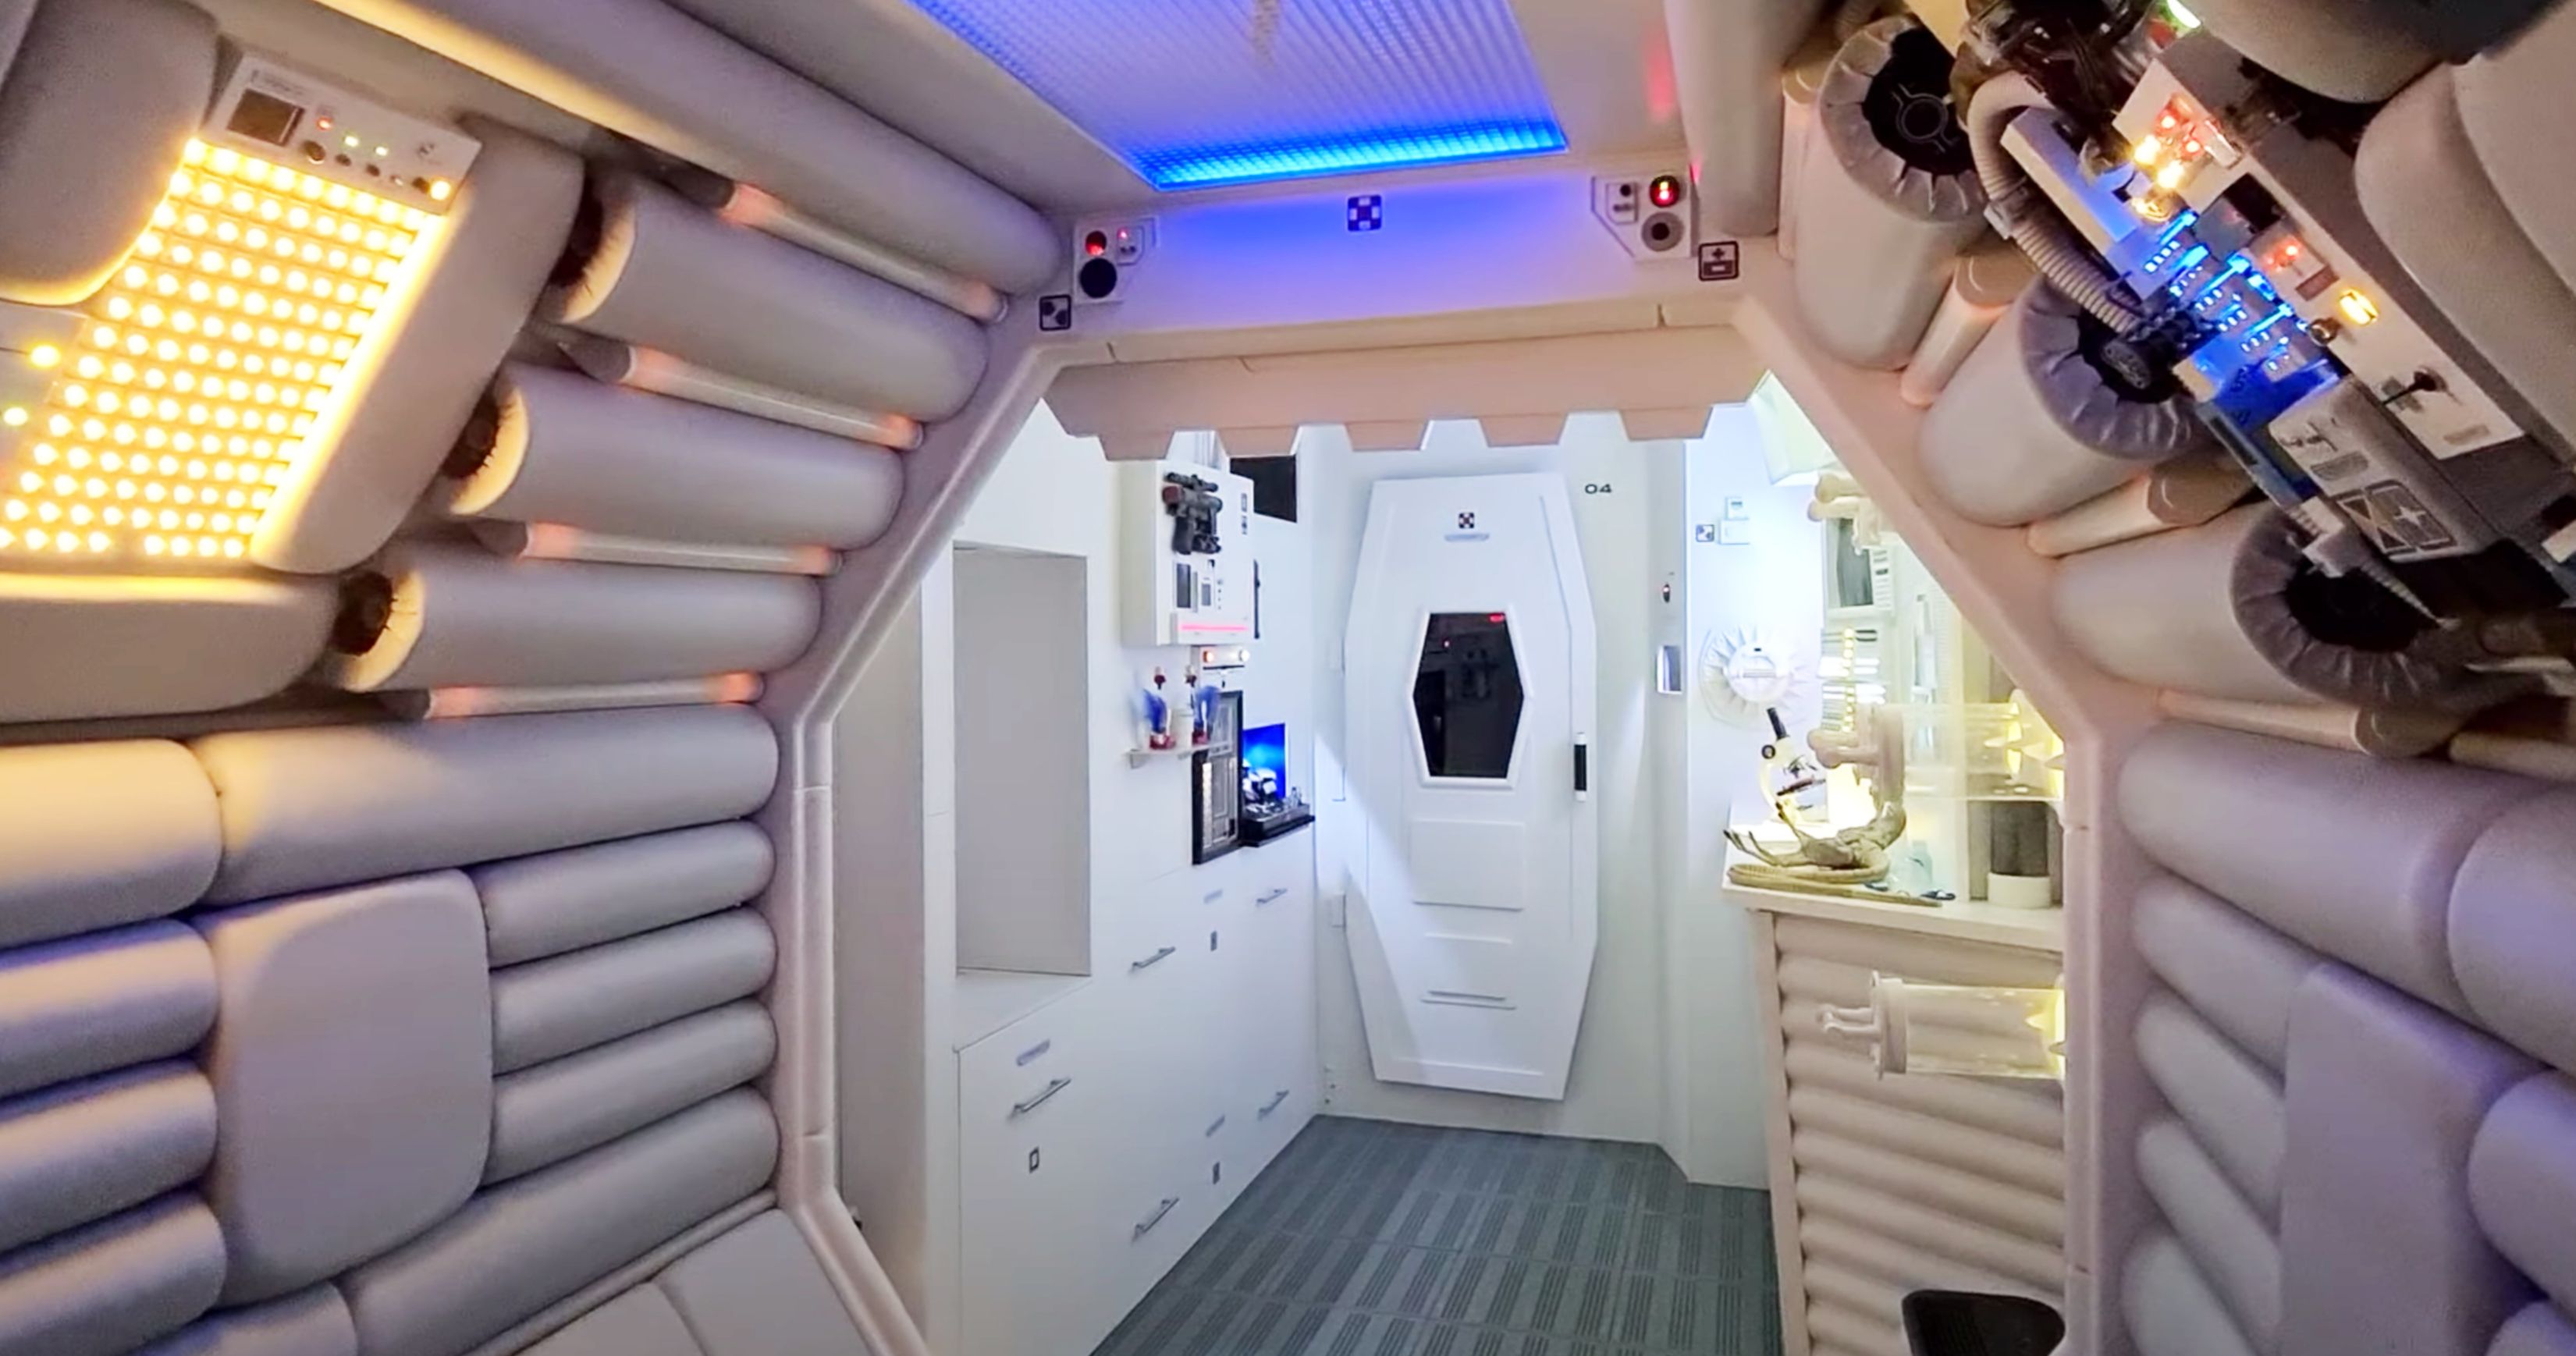 Fan Builds Nostromo Interior Replica for an Alien Museum in His Apartment